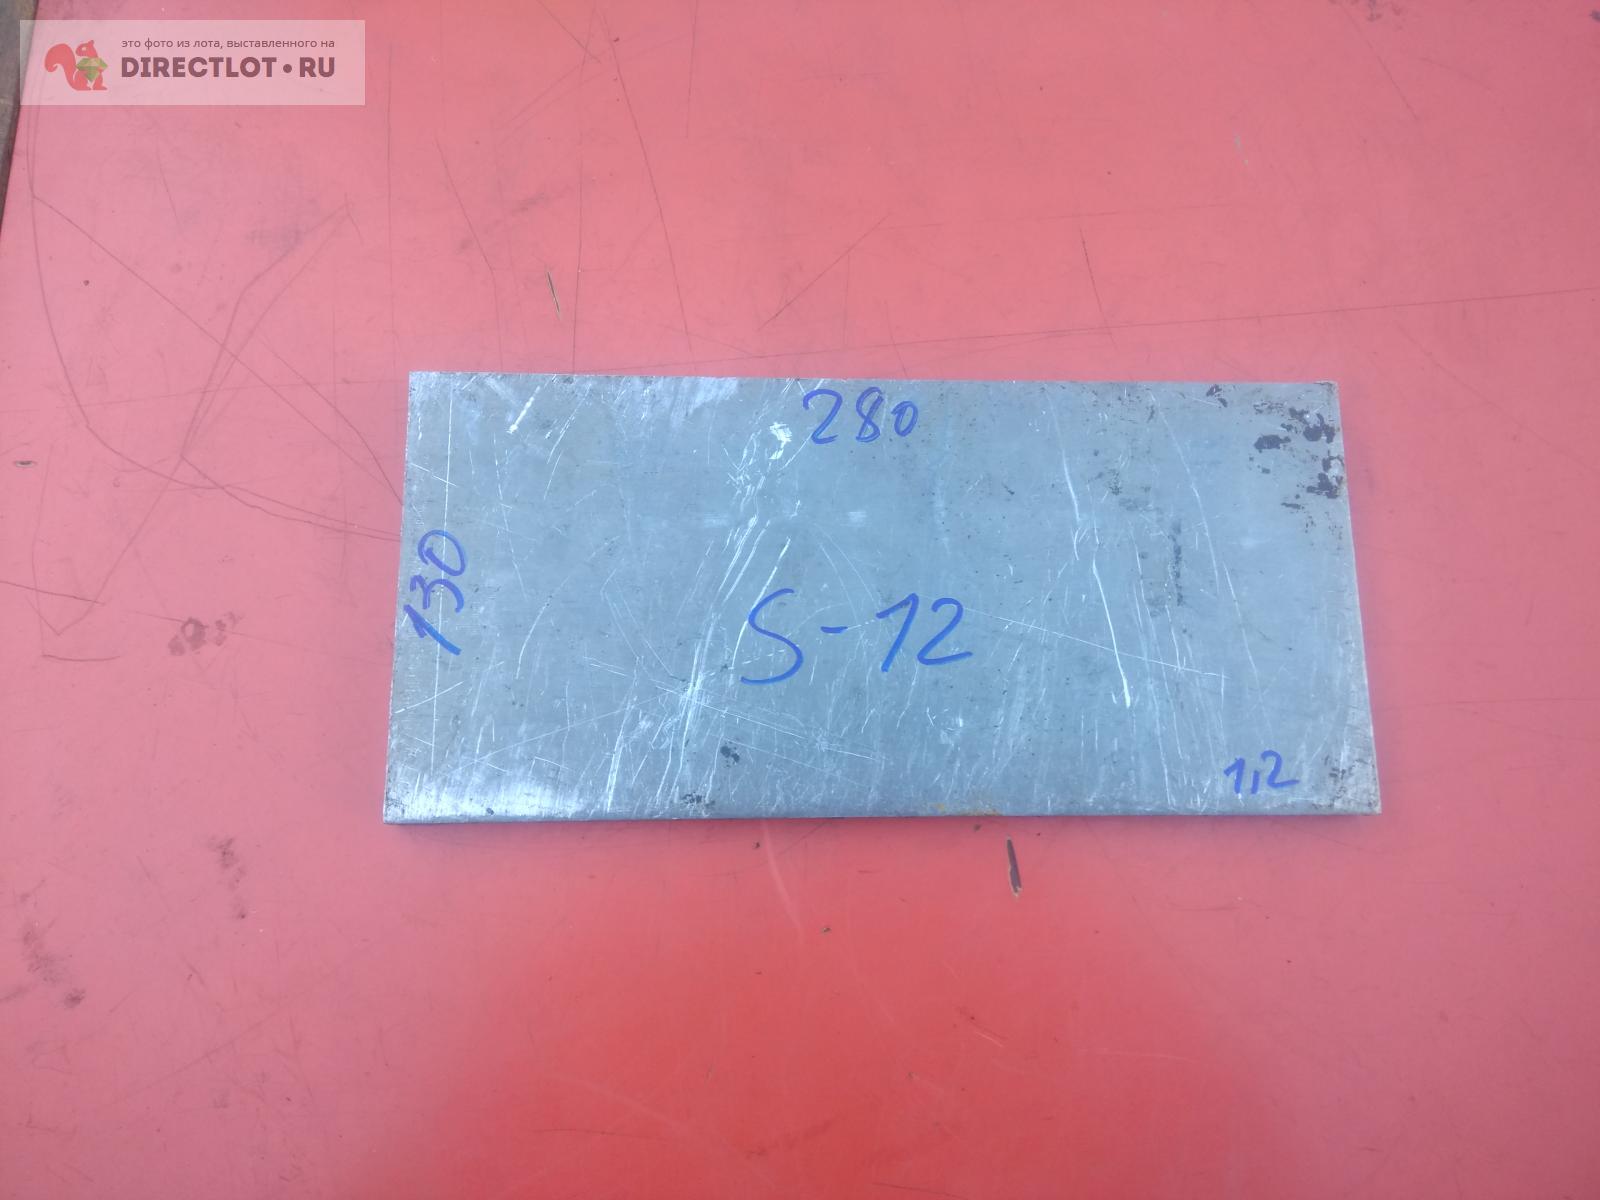 Алюминий лист,( пластина) 280х130х12мм.Марка не известна.  в .